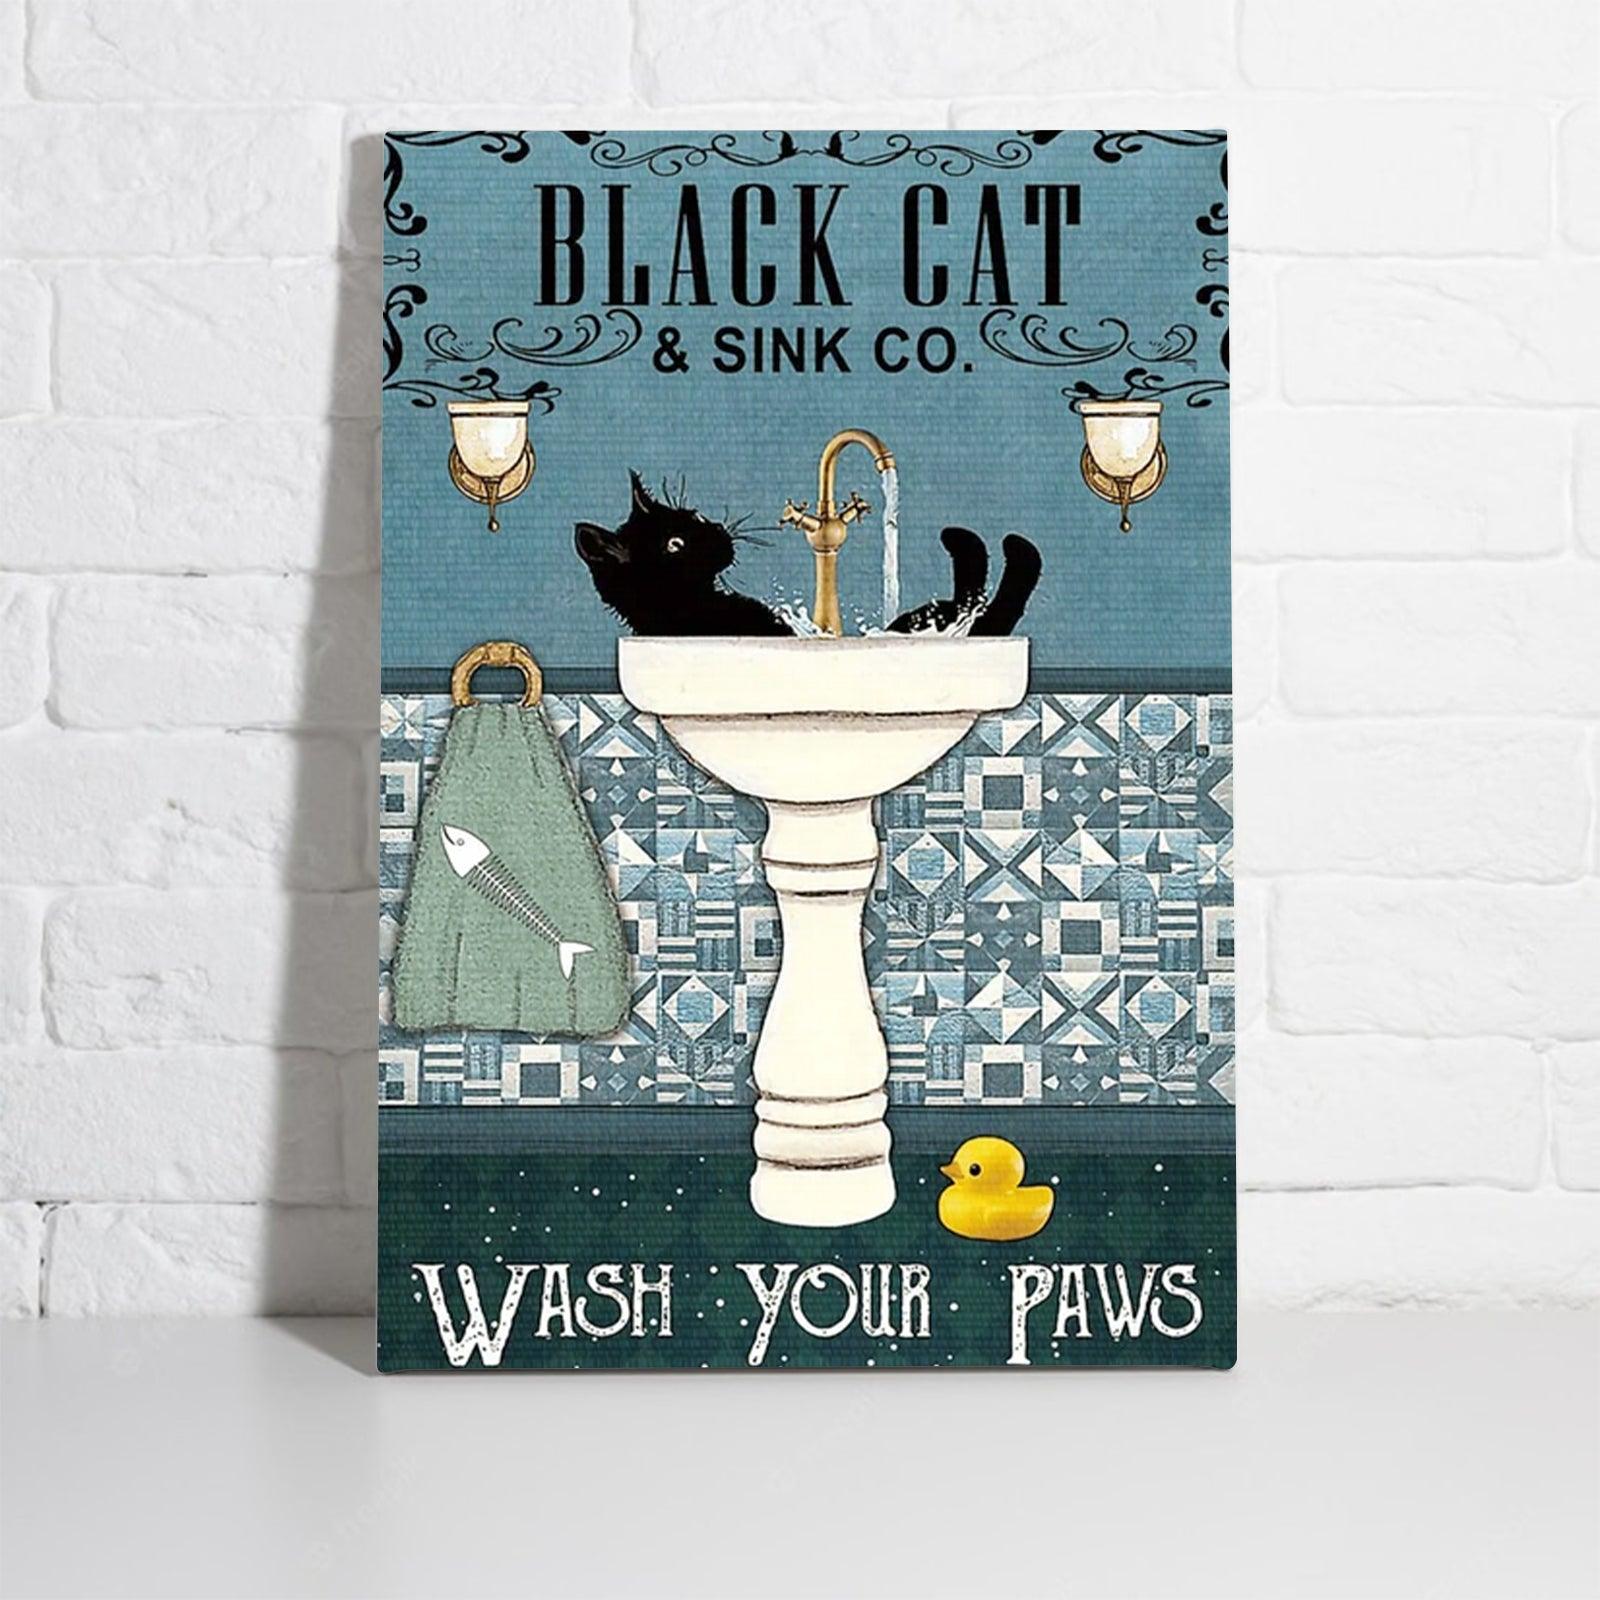 Black Cat Portrait Canvas - Black Cat & Sink Co Wash Your Paws Premium Wrapped Canvas - Perfect Gift For Black Cat Lovers, Cat Lovers, Cat Owners - Amzanimalsgift